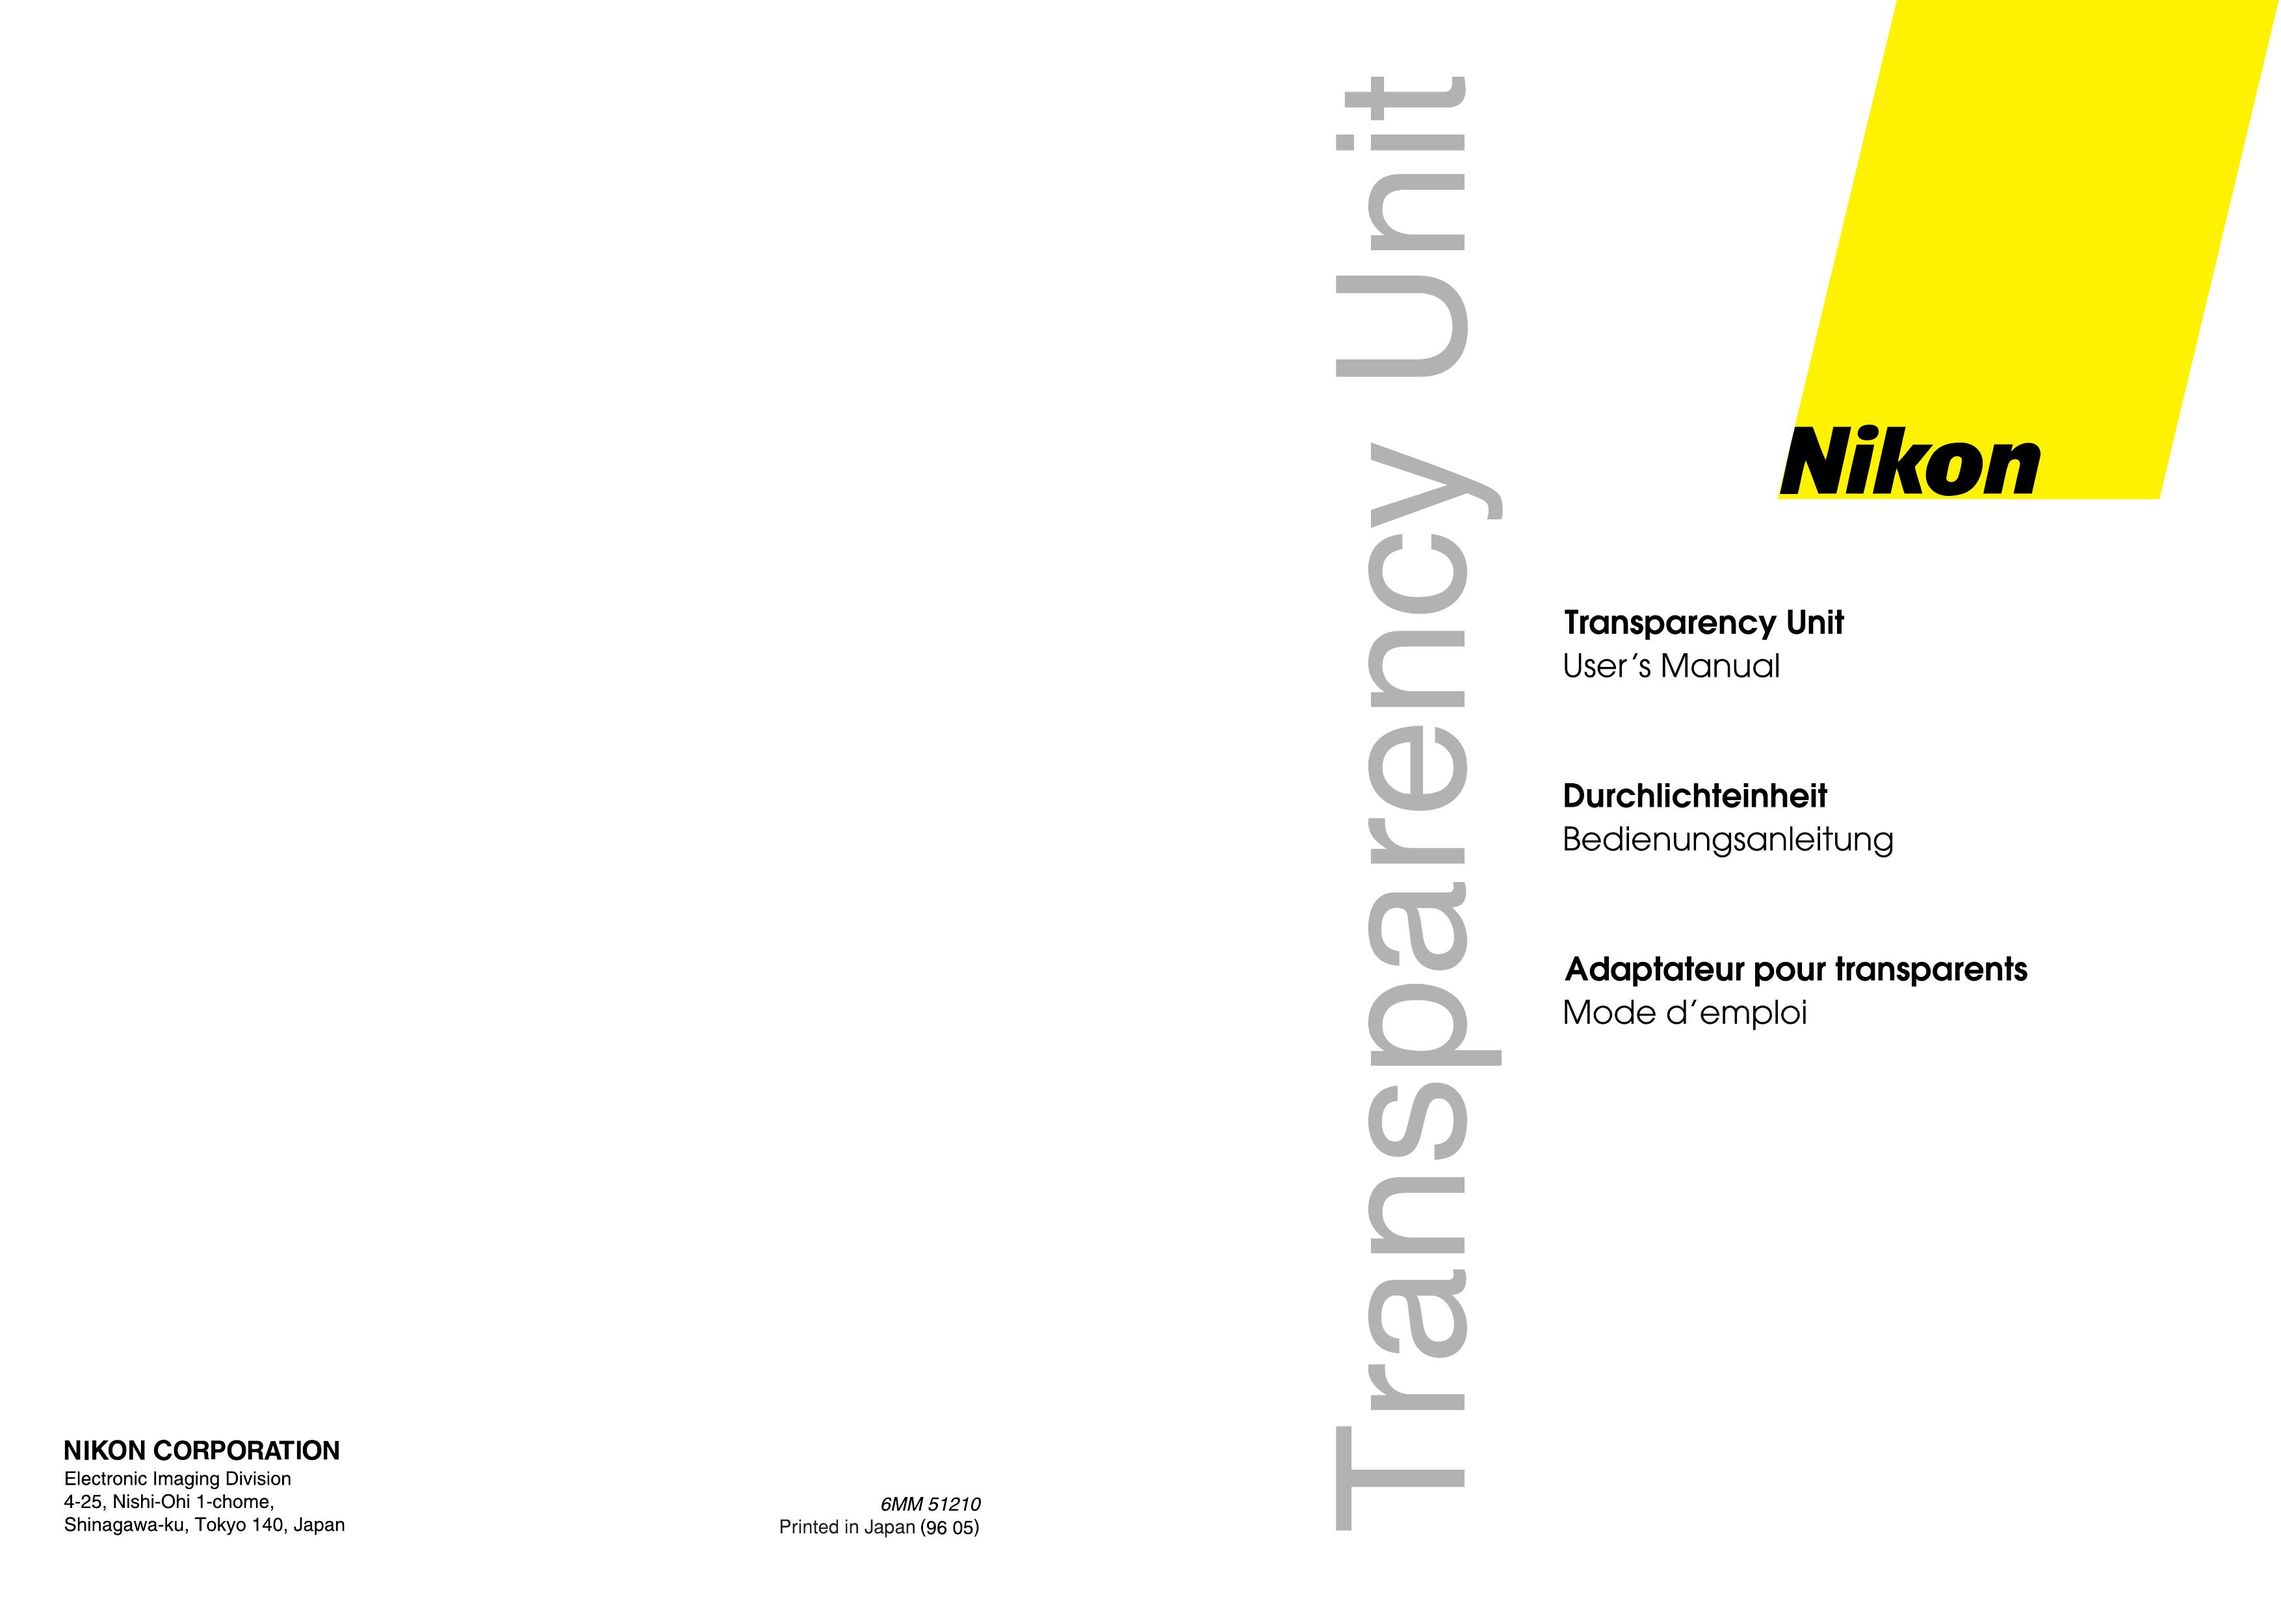 Nikon Transparency Unit Scanner User Manual